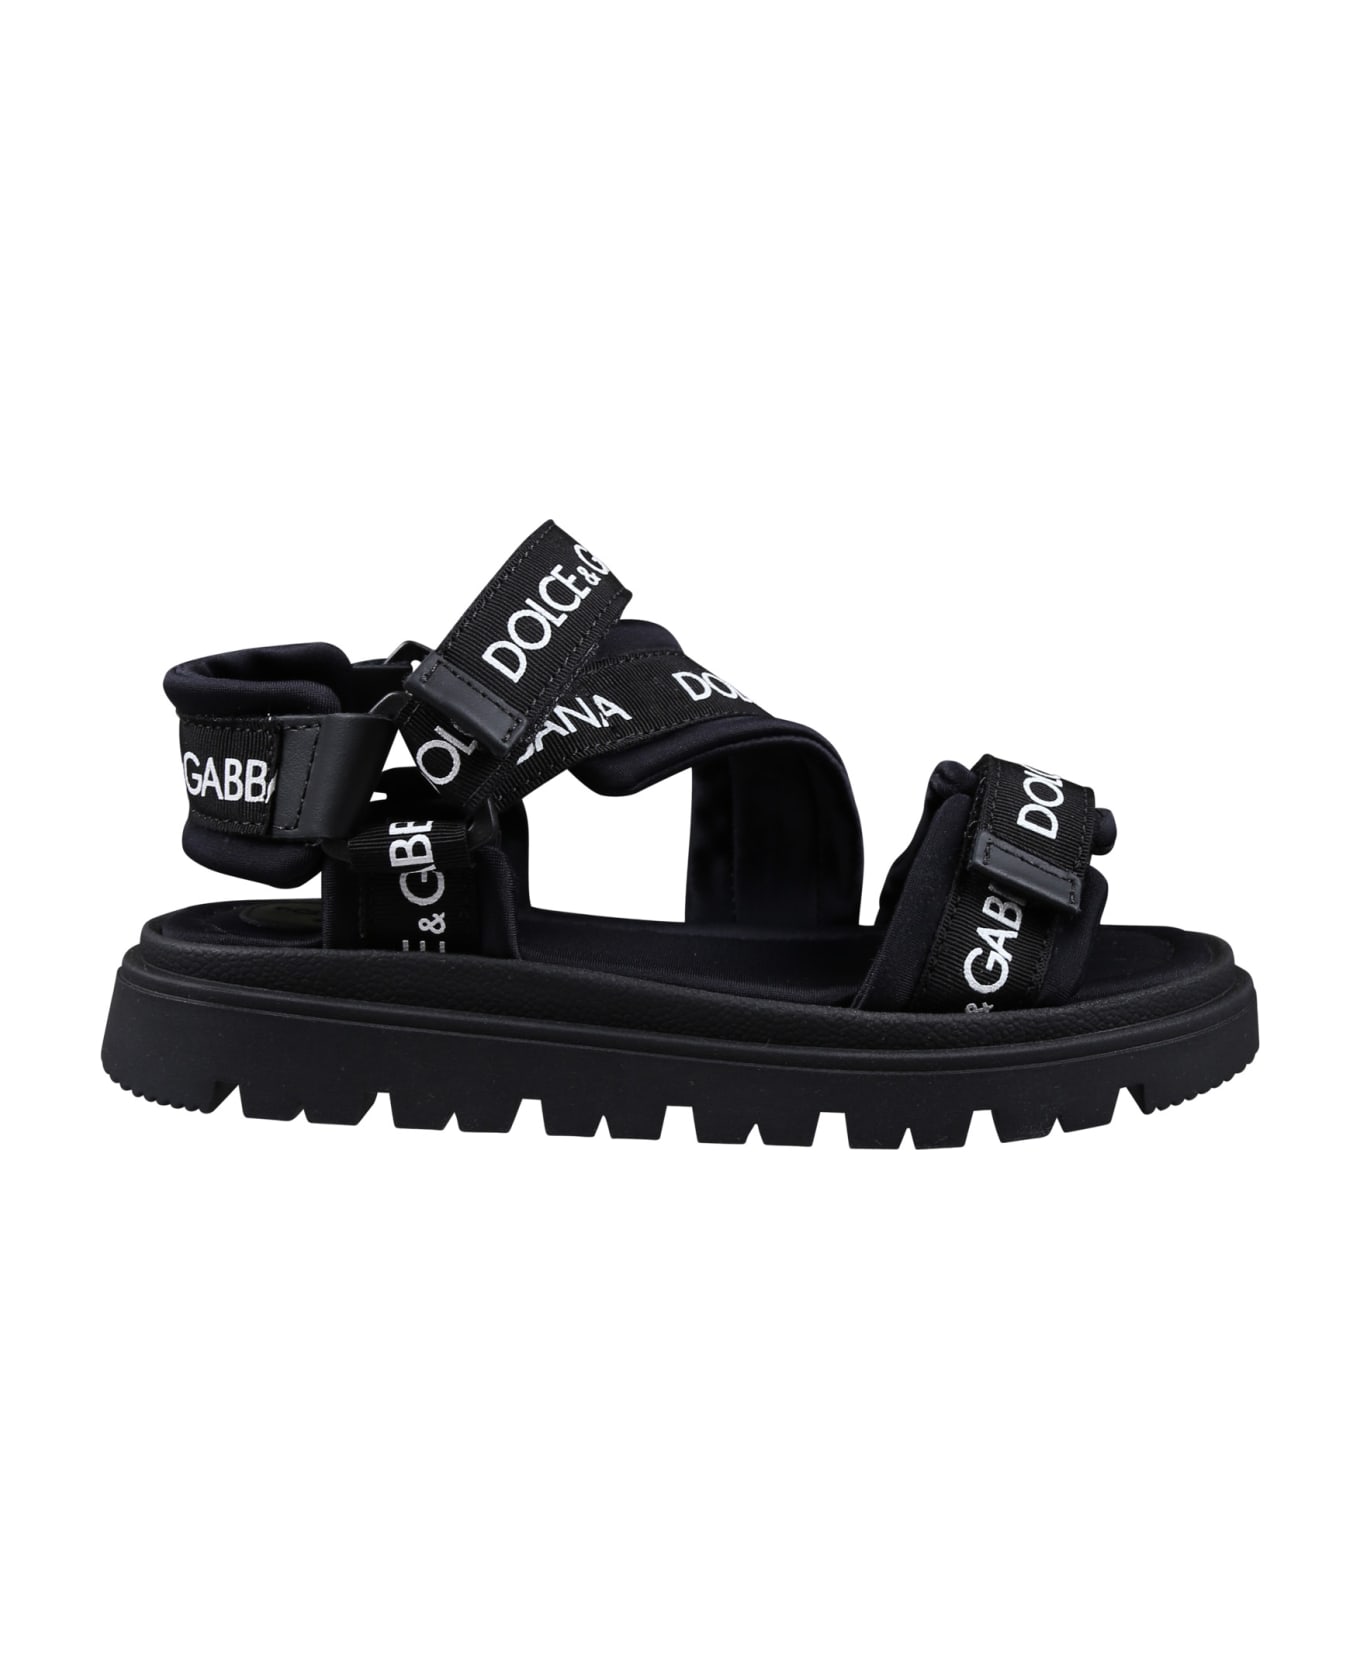 Dolce & Gabbana Black Sandals For Kids With Logo - Black